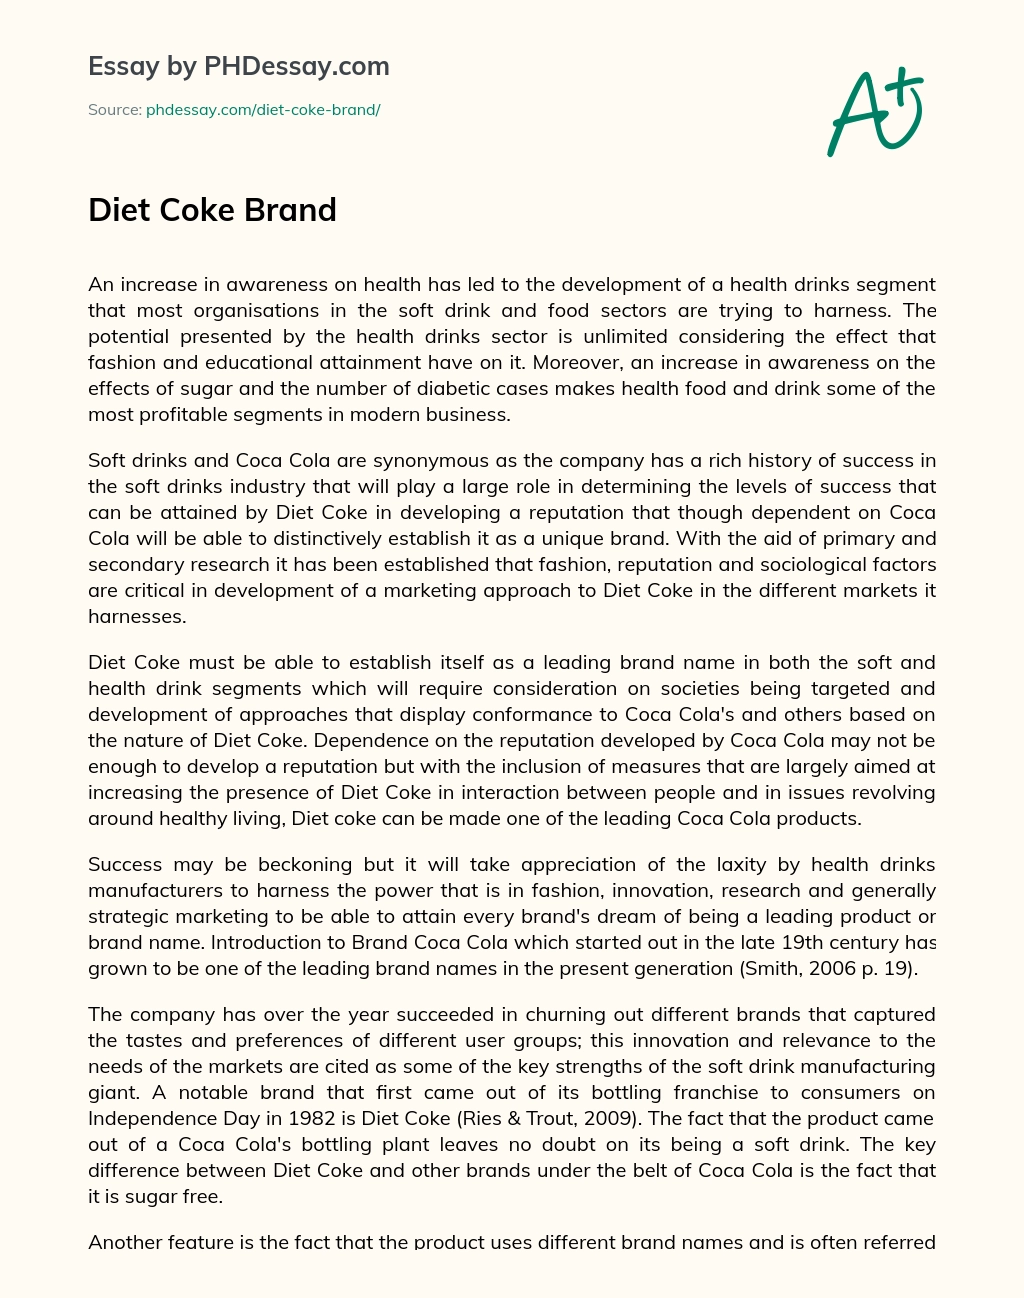 Diet Coke Brand essay